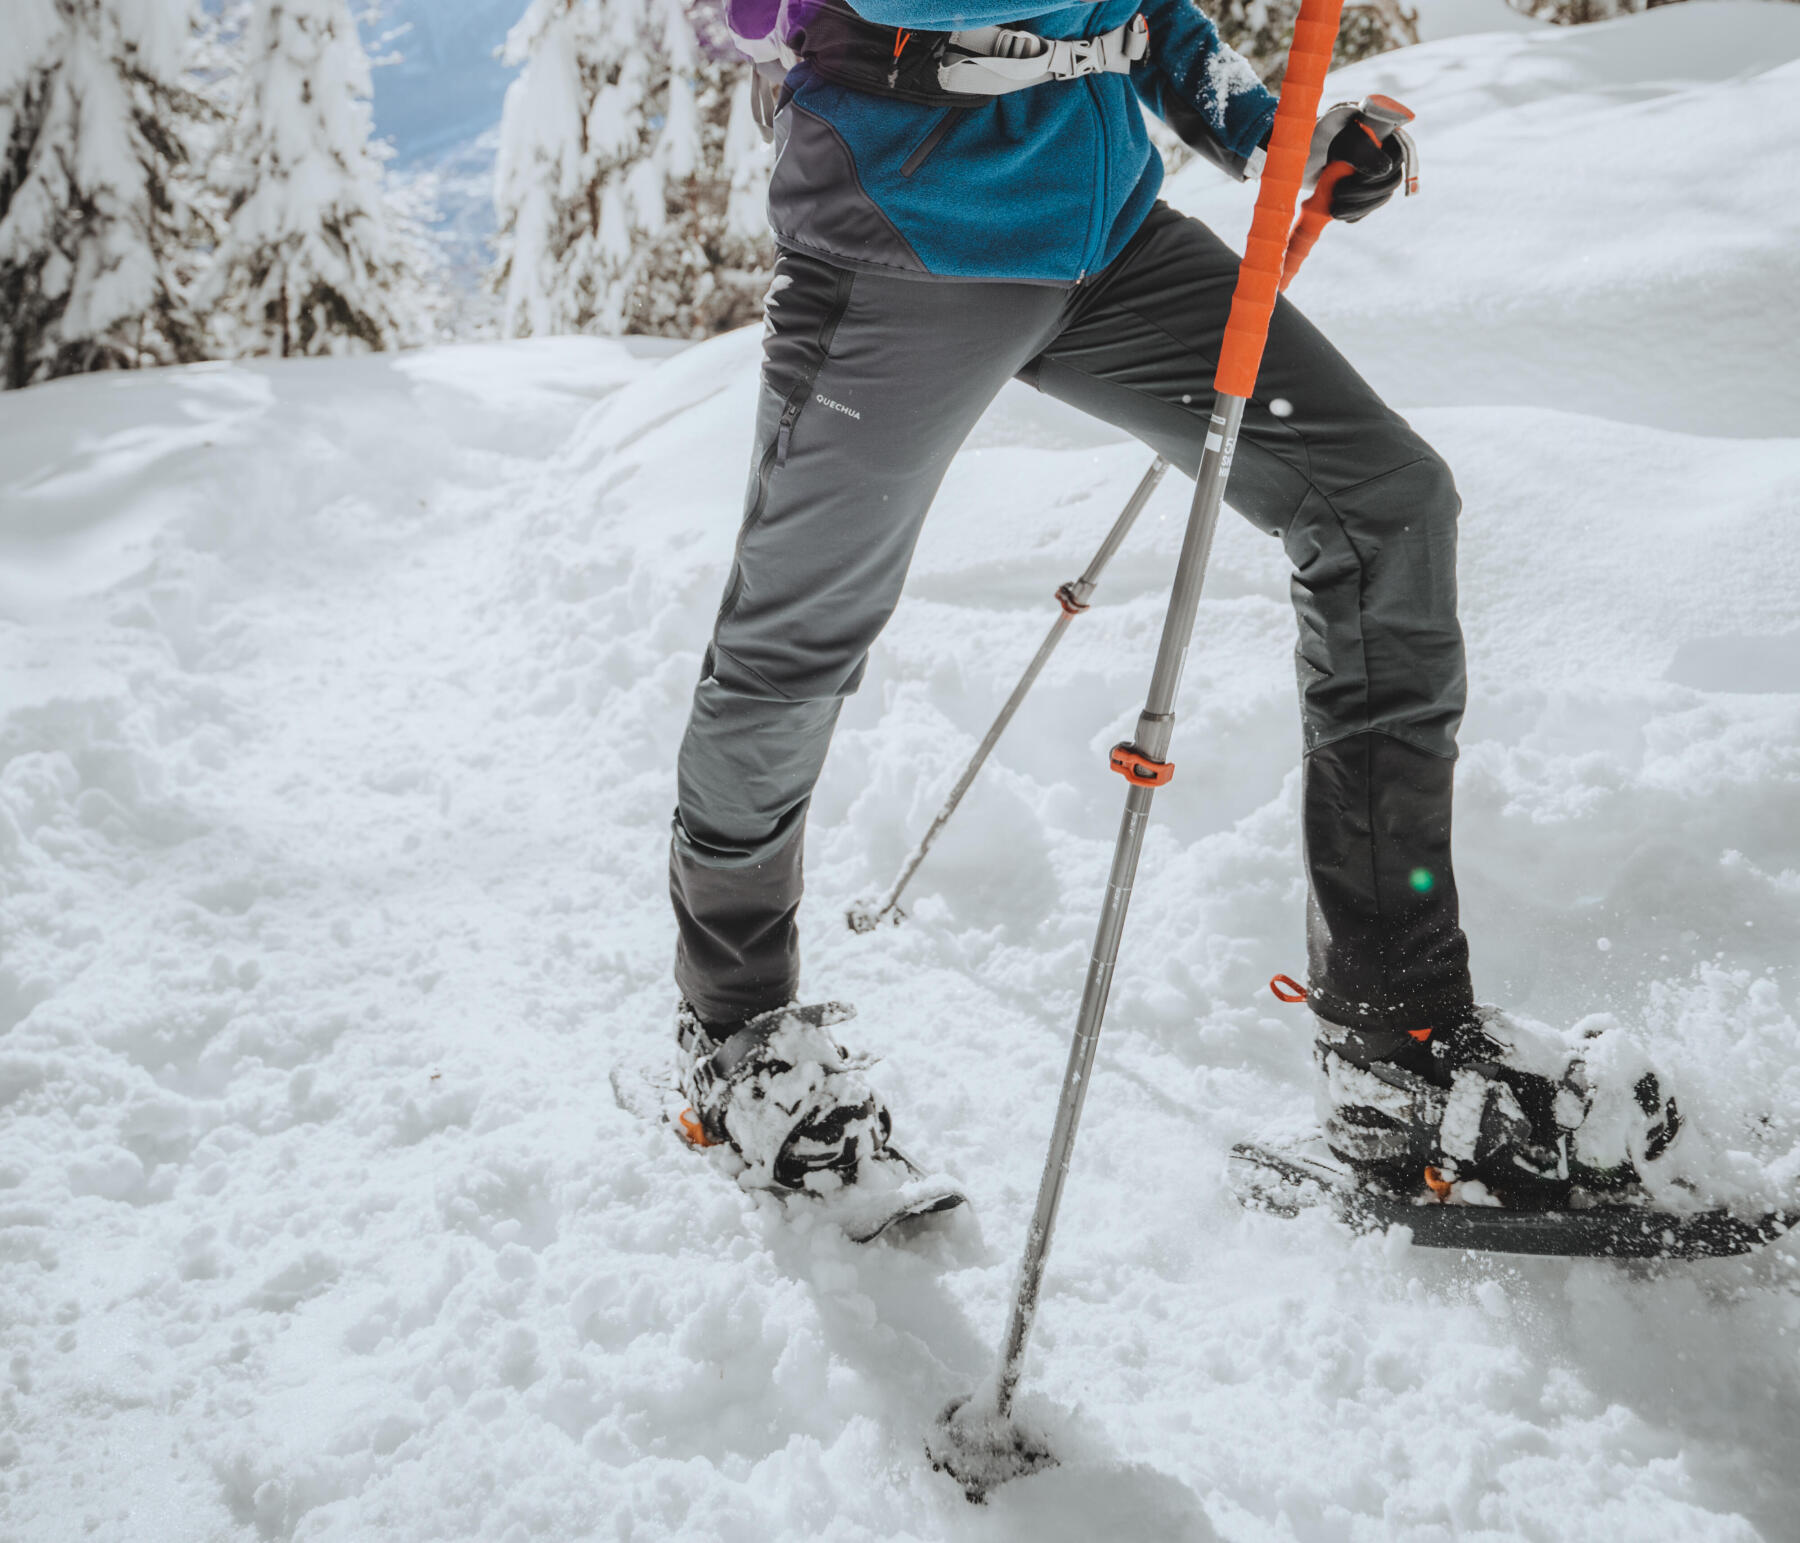 How do you choose your snowshoe hiking equipment?